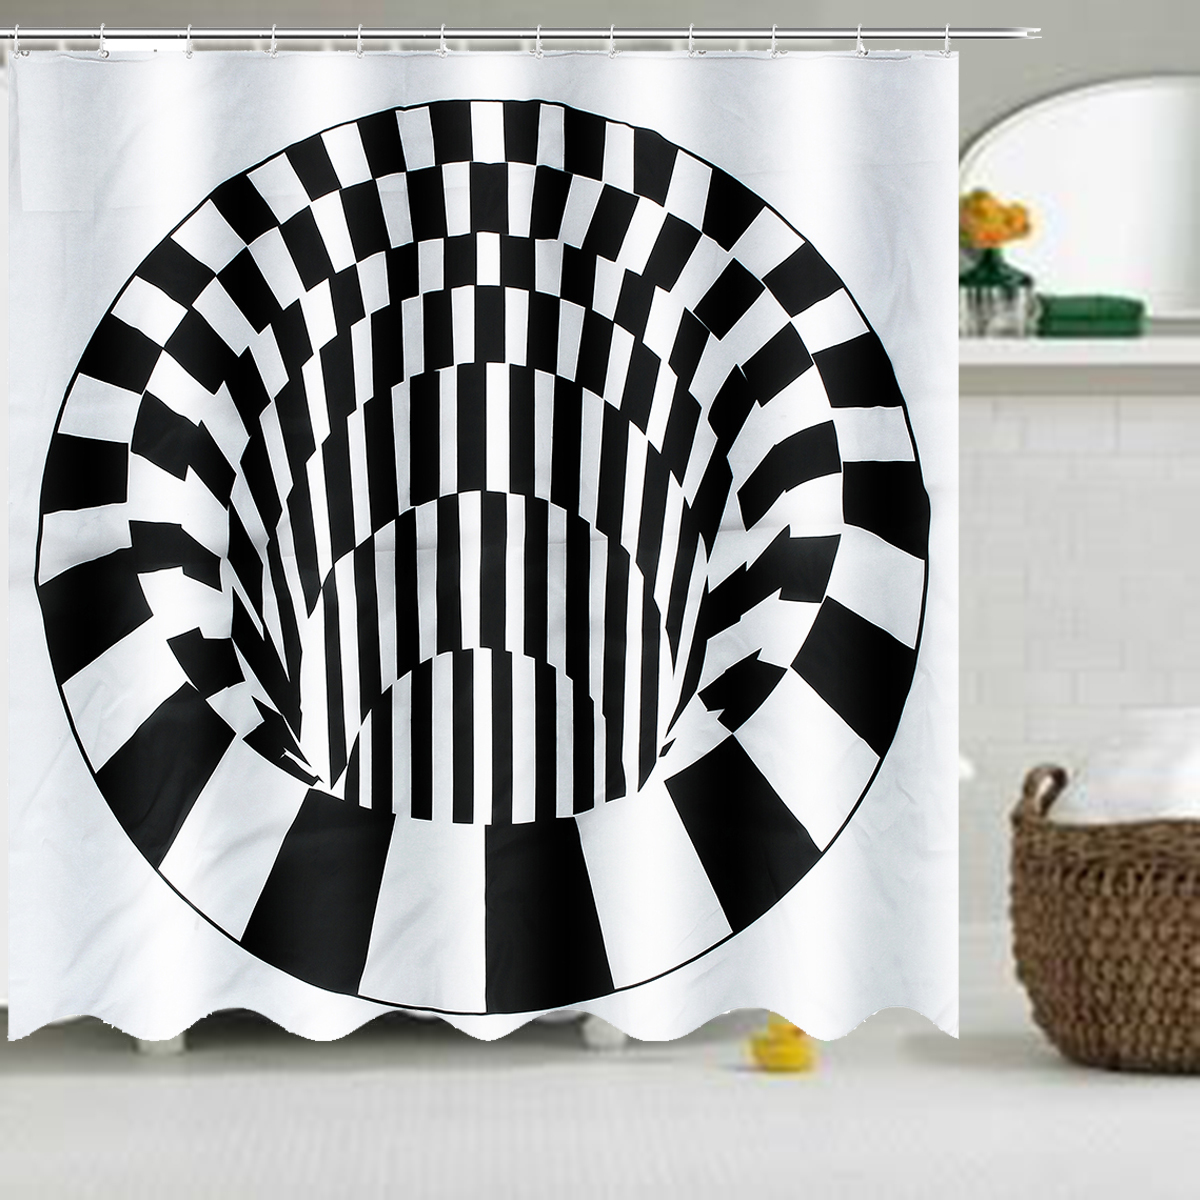 3D-Effect-Geometric-Square-Bathroom-Bath-Shower-Curtain-180180cm-w-12-1530246-2